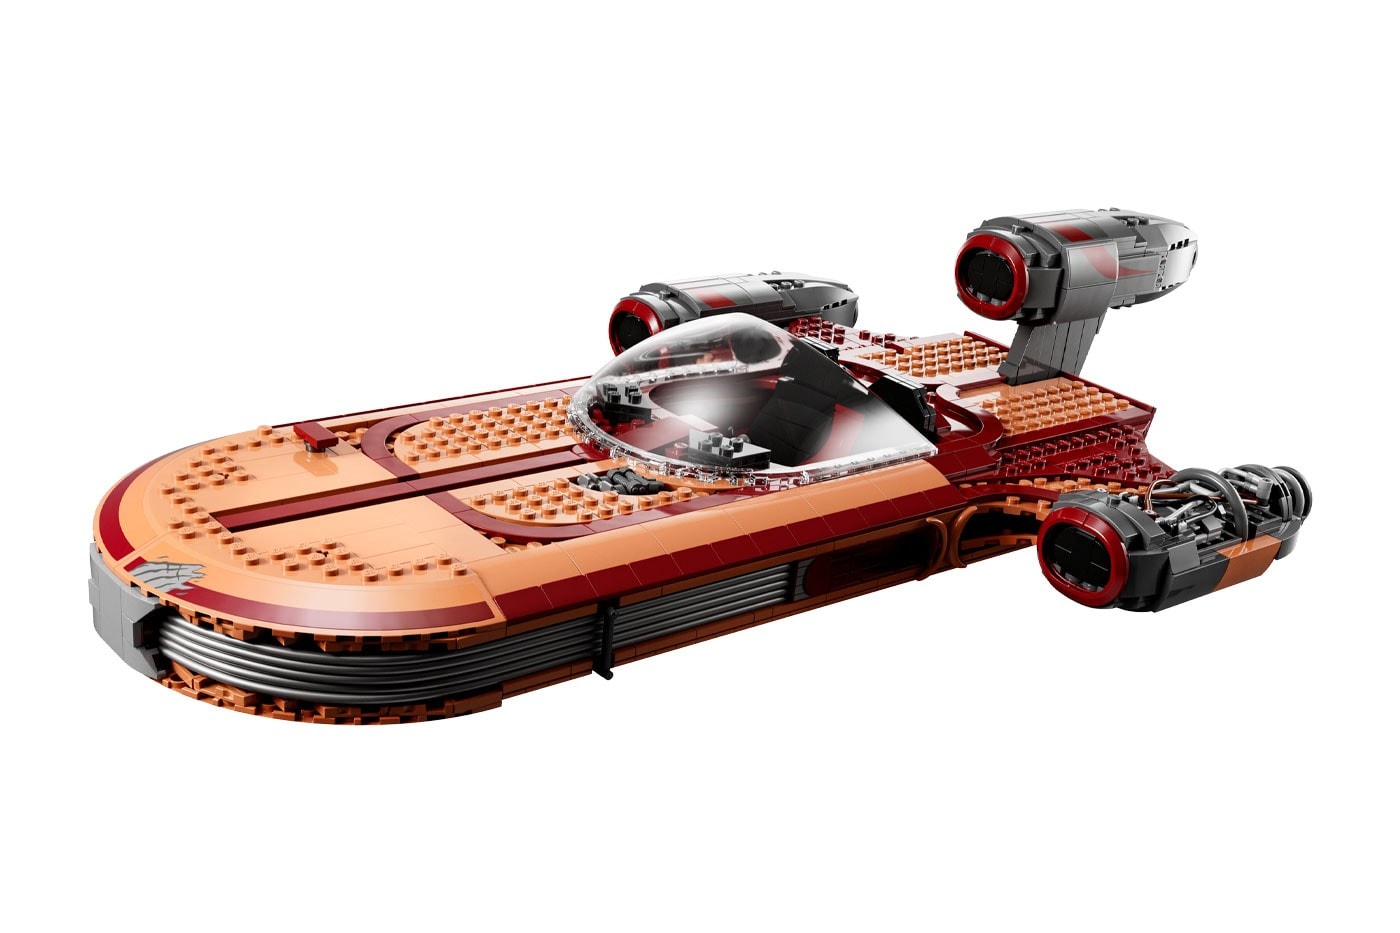 LEGO《Star Wars》Luke Skywalker‘s Landspeeder 積木模型正式登場